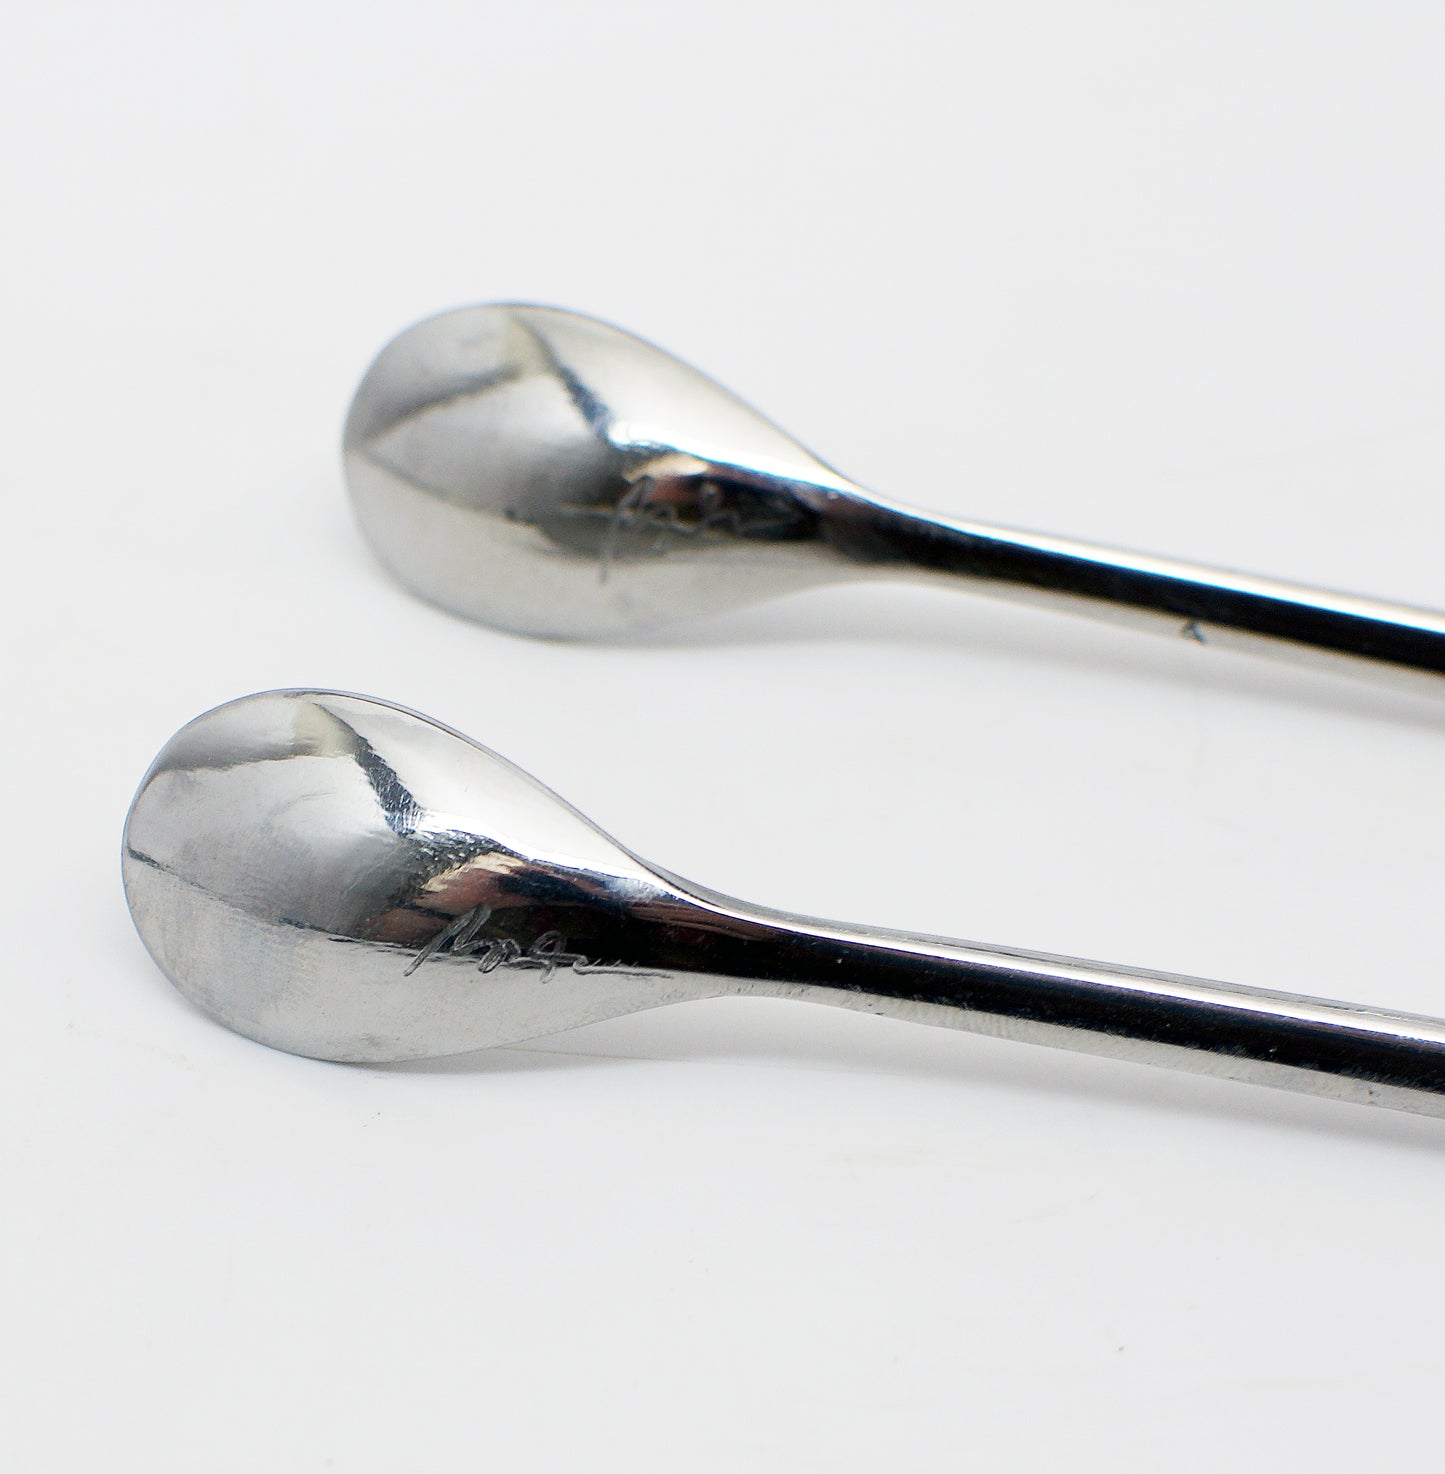 Cuchar-Ita Spoons with Iron Handle - Set of 2